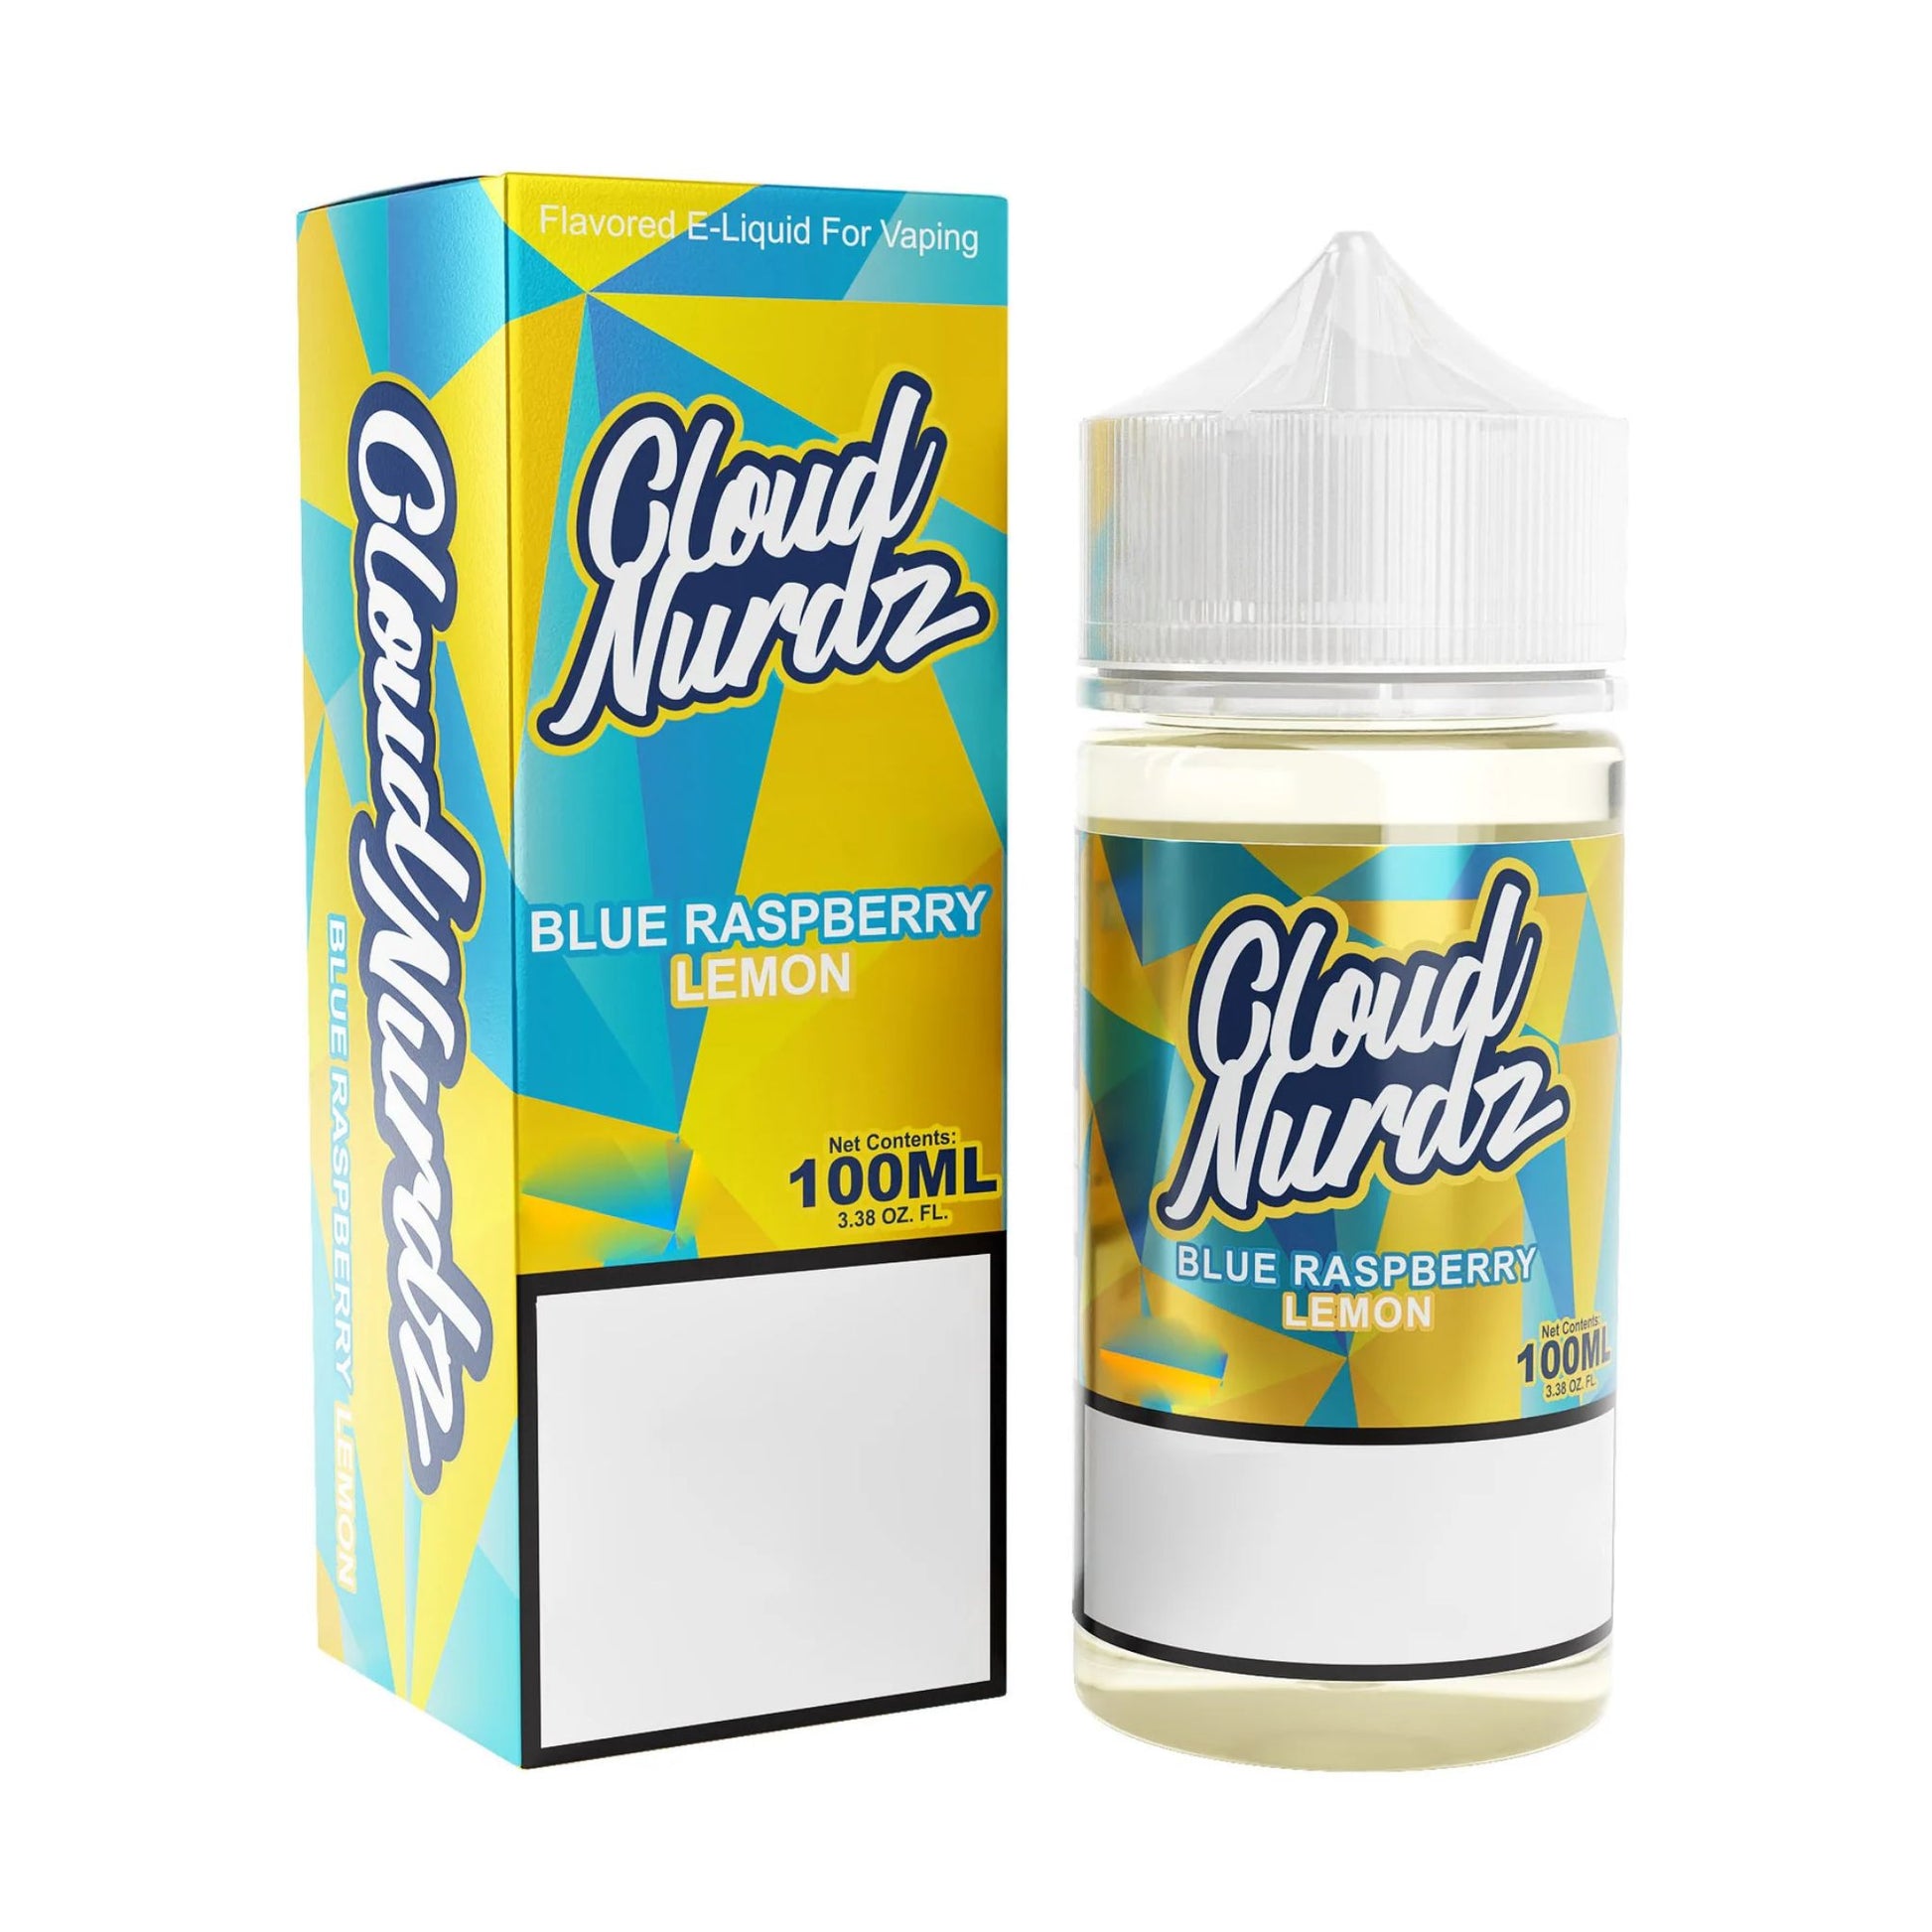 Cloud Nurdz | Blue Raspberry Lemon | 100ml bottle and box